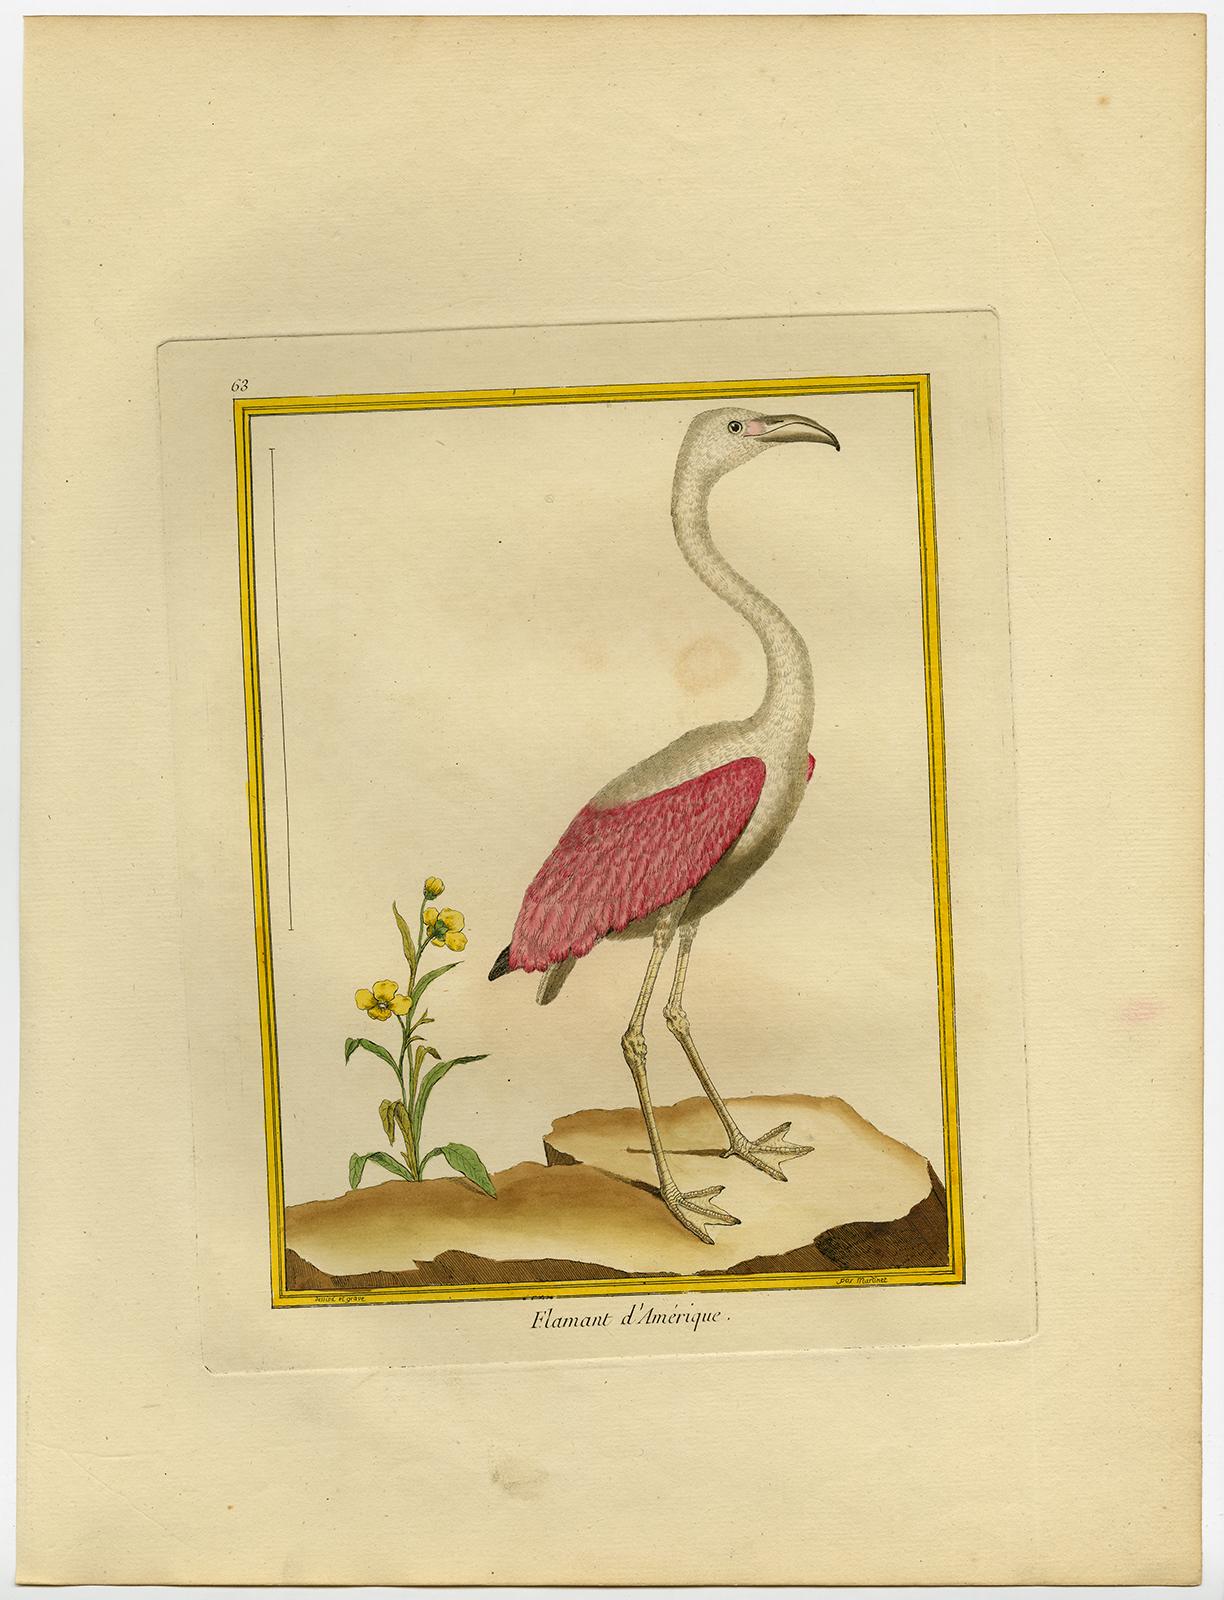 American Flamingo by Martinet - Handcoloured engraving - 18th century - Print by Francois Nicolas Martinet